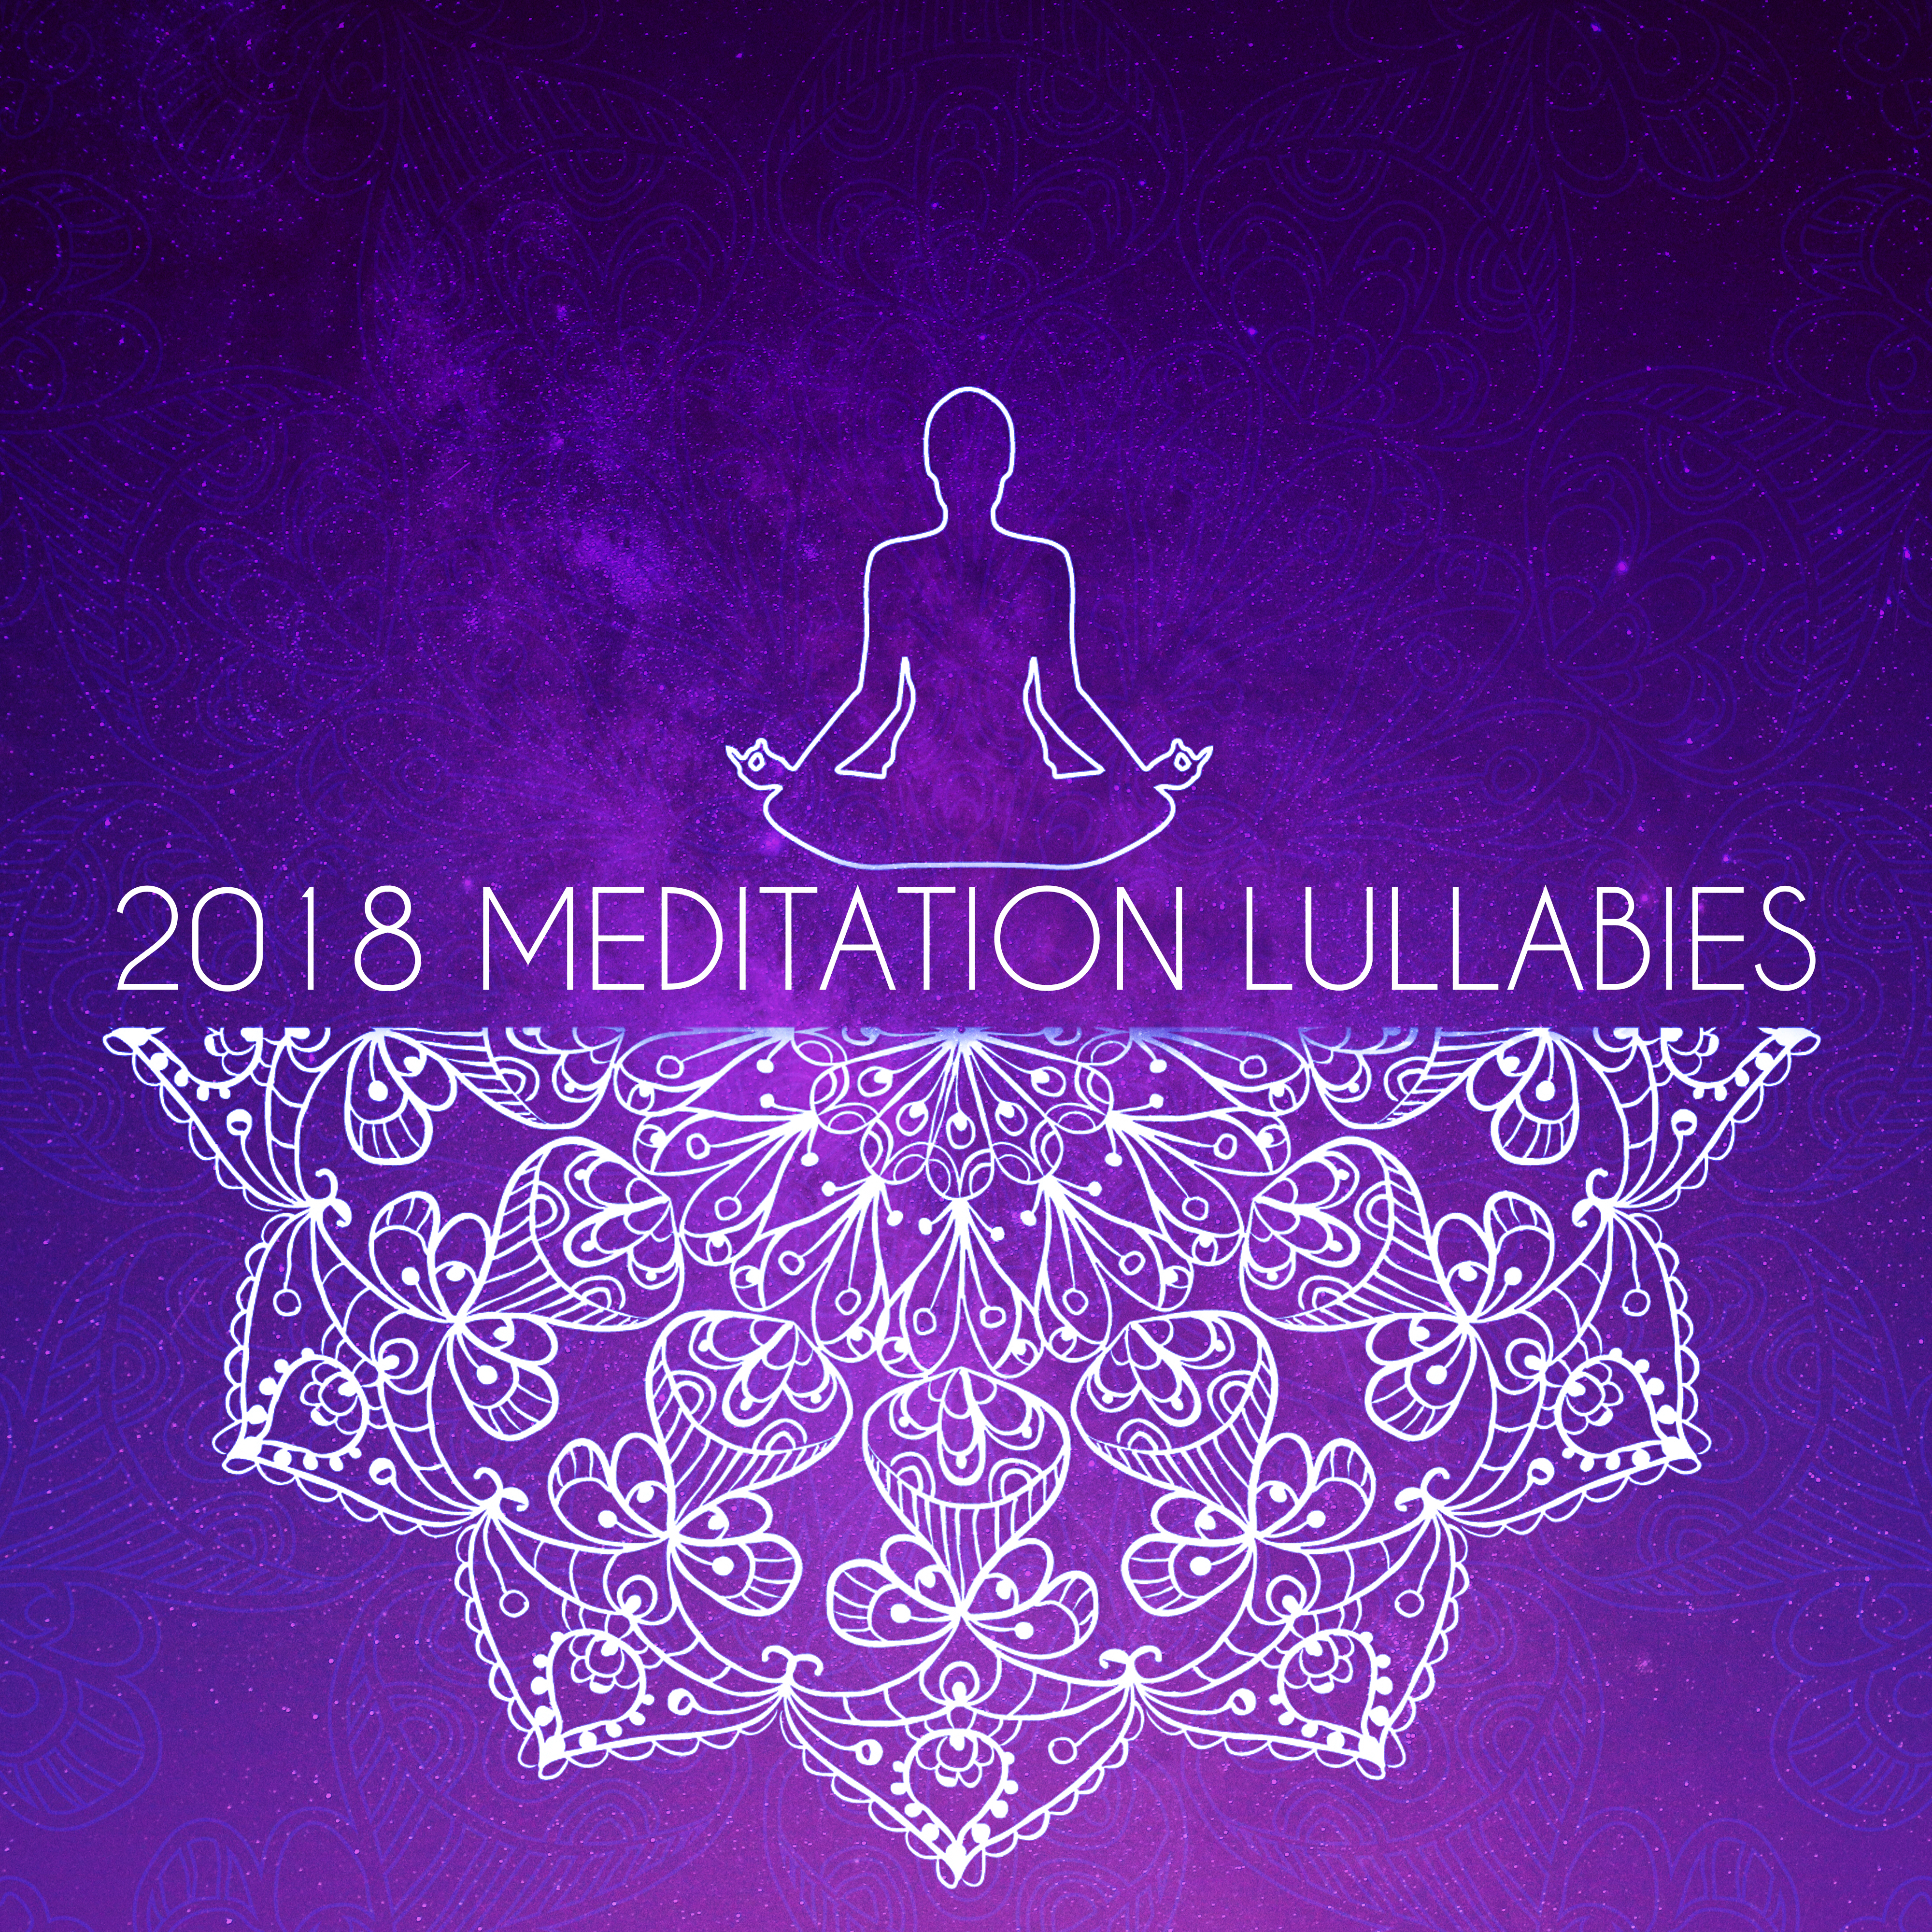 2018 Meditation Lullabies